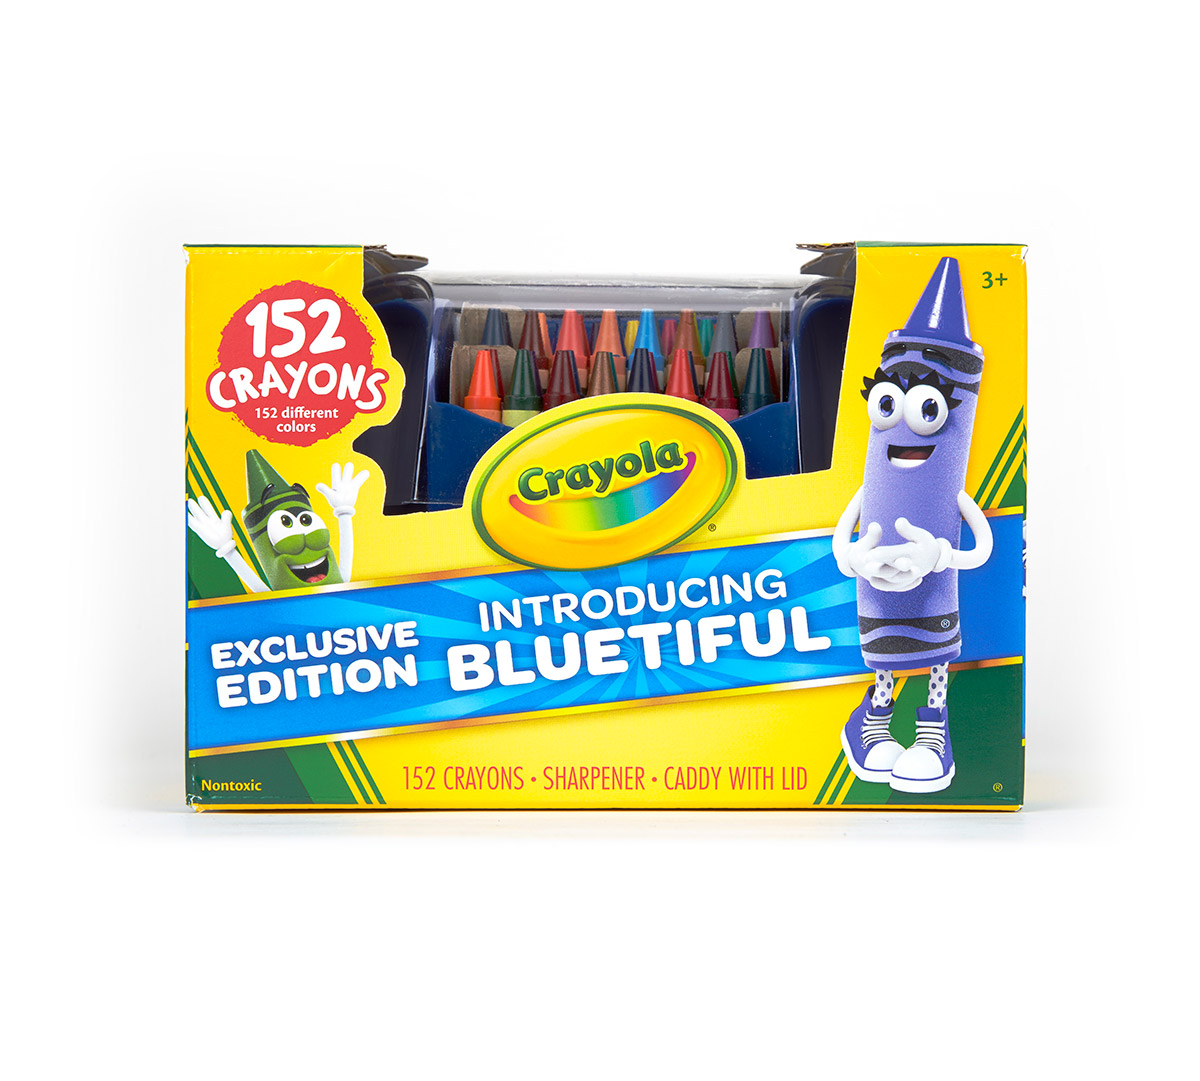 Ultimate Crayon Collection with Bluetiful | Crayola.com Meta